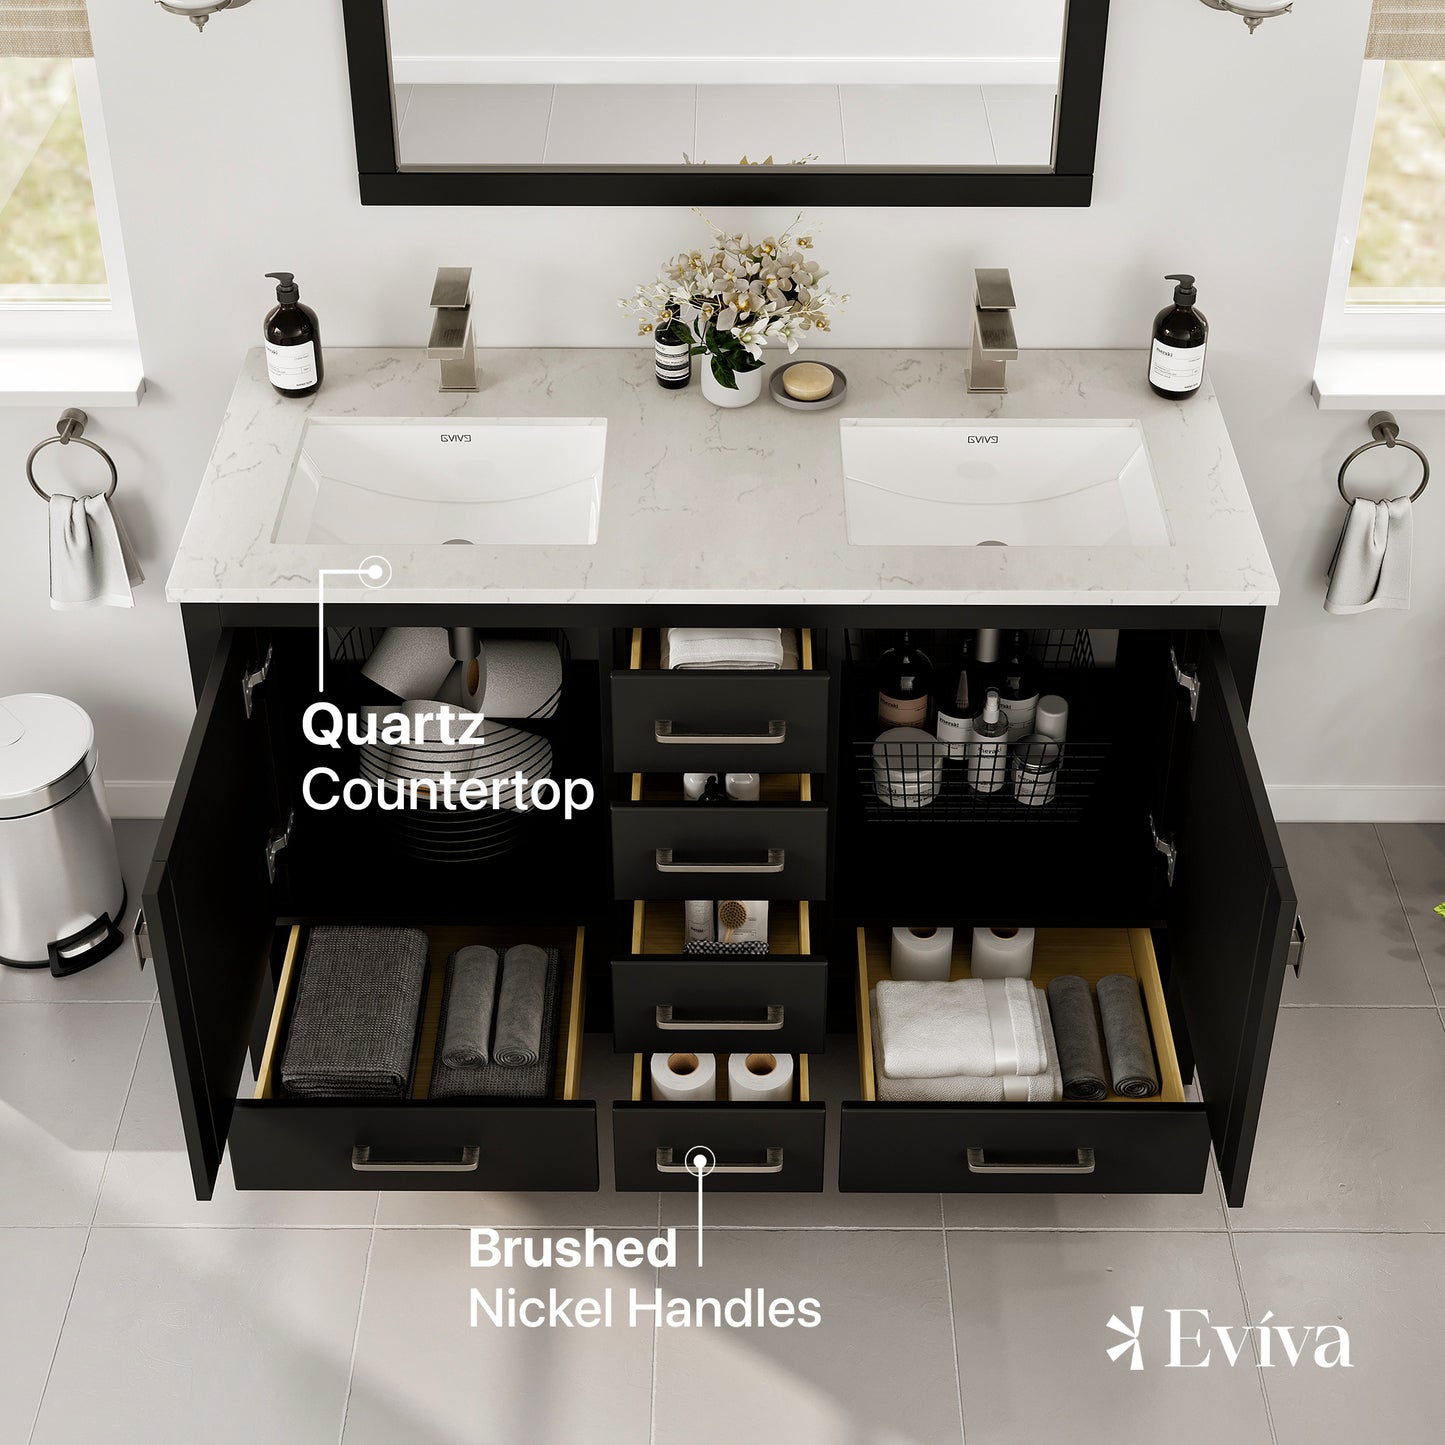 London 48"W x 18"D Espresso Bathroom Vanity with Carrara Quartz Countertop and Undermount Porcelain Sink